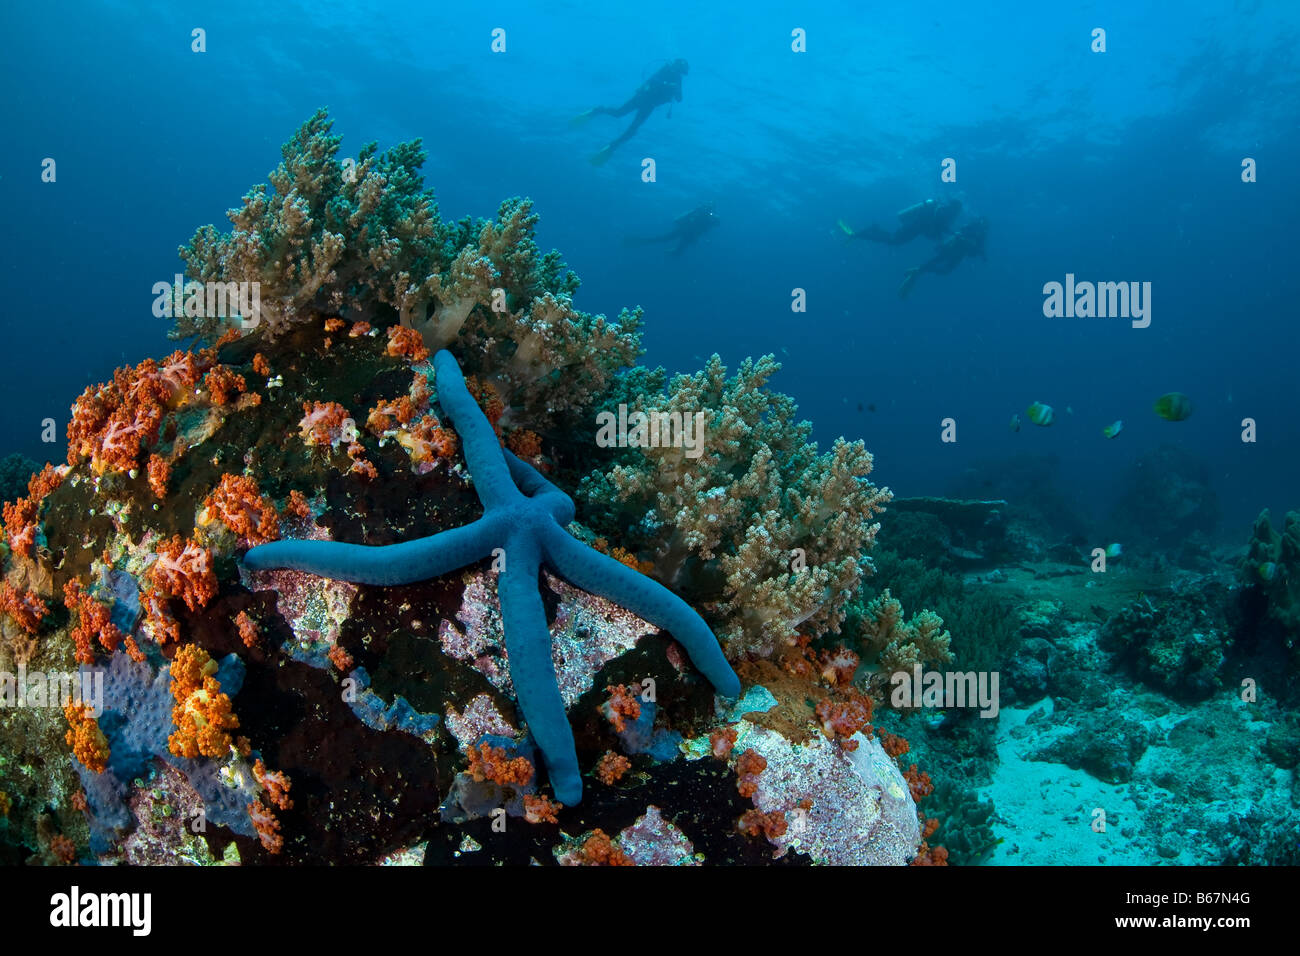 Blue Seastar in Coral Reef Linkia laevigata Raja Ampat West Papua Indonesia Stock Photo